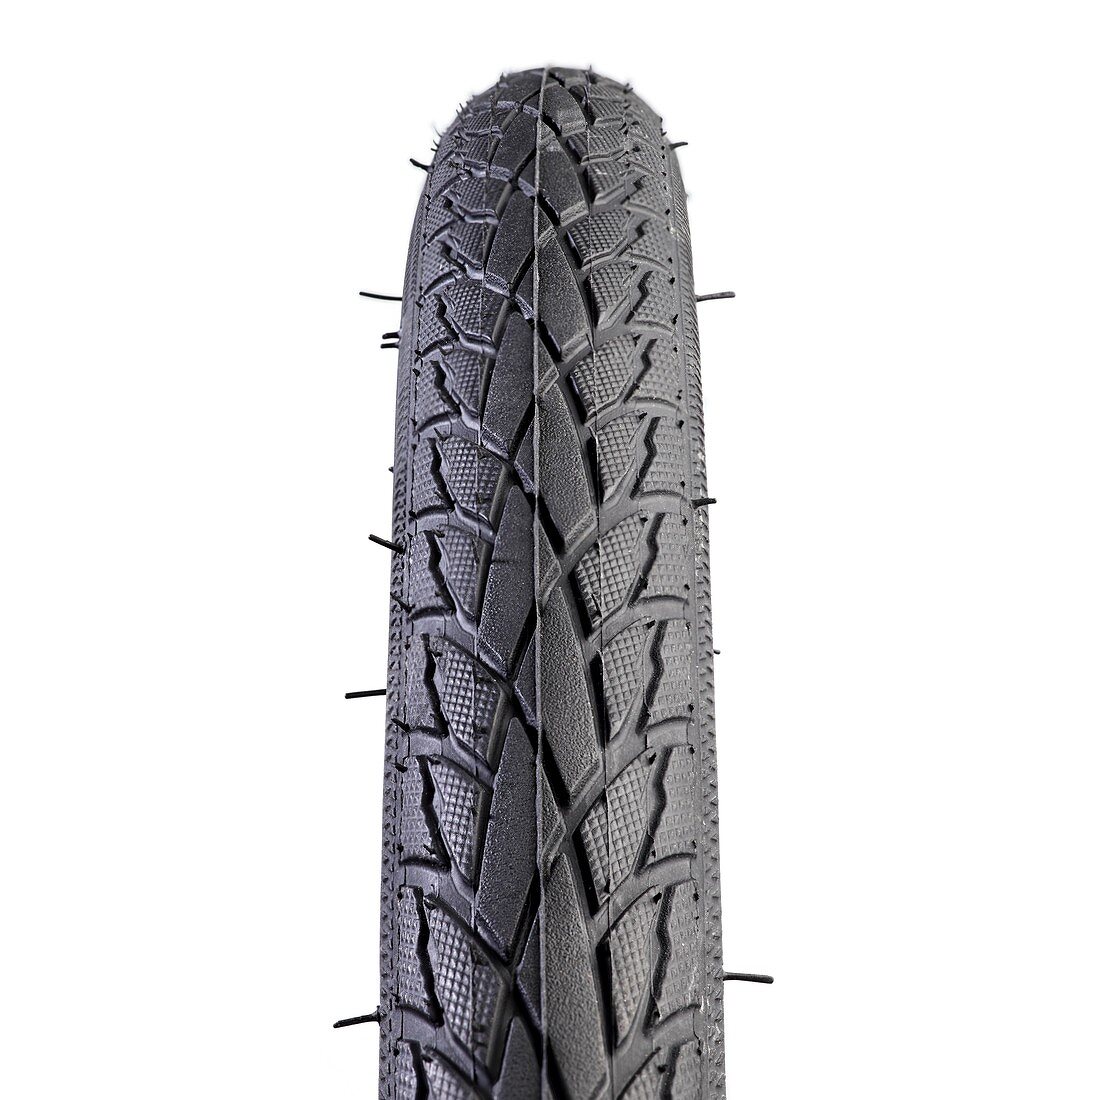 Hybrid bike tyre